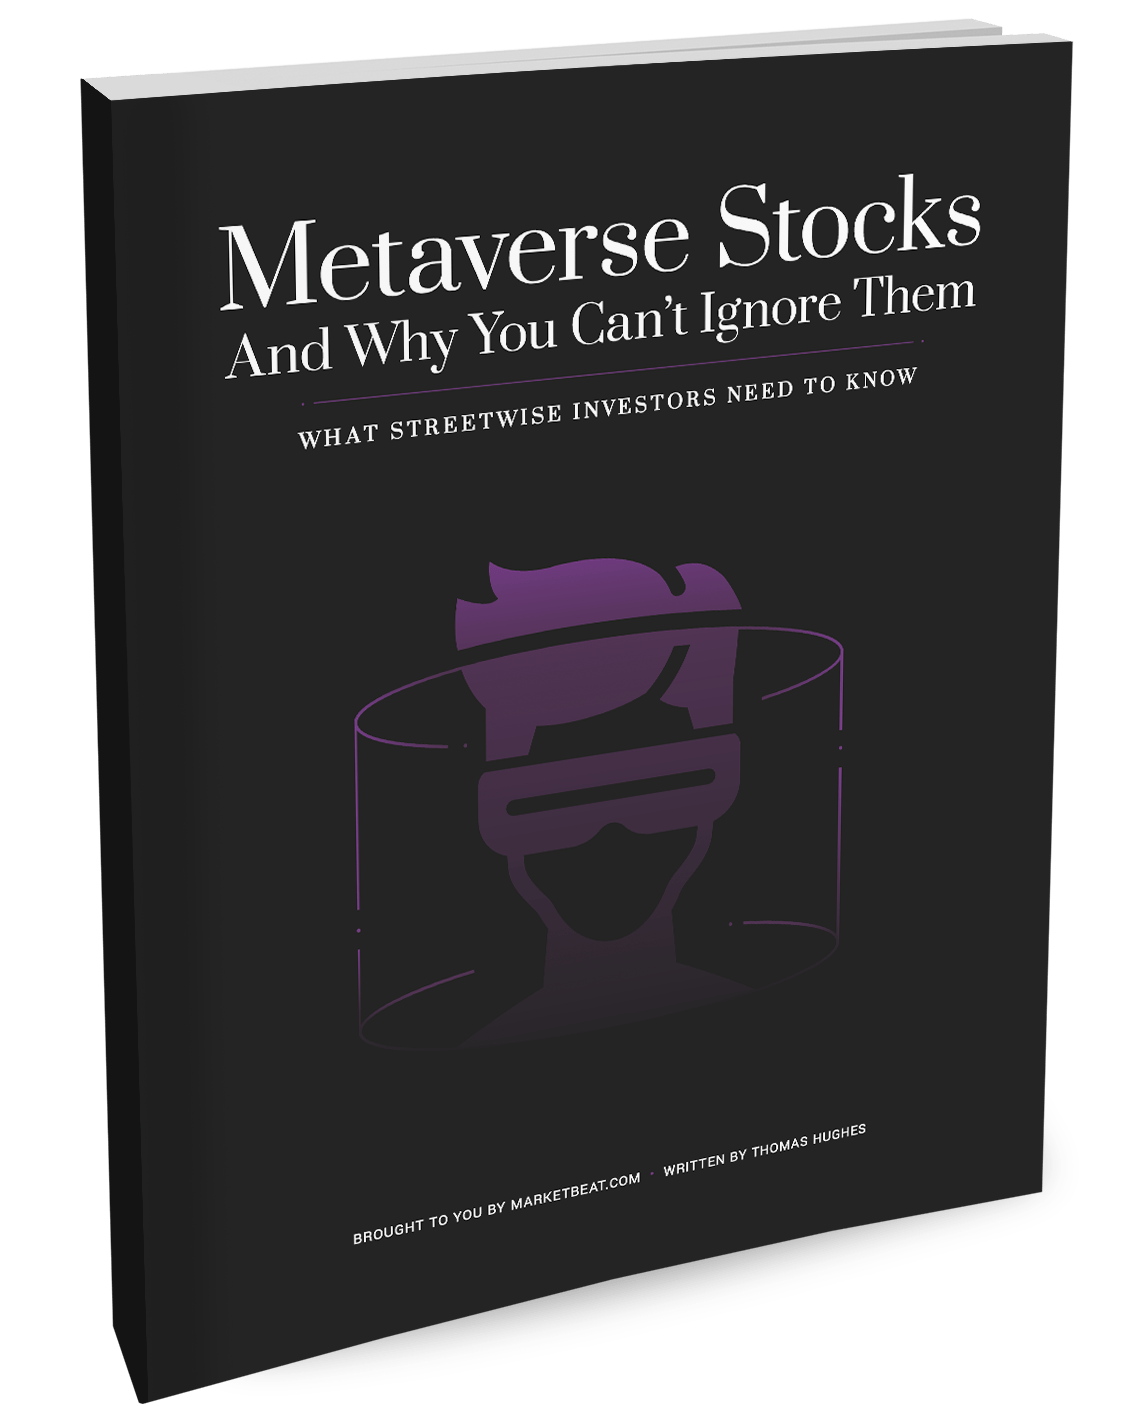 Metaverse 股票以及为什么你不能忽视它们封面